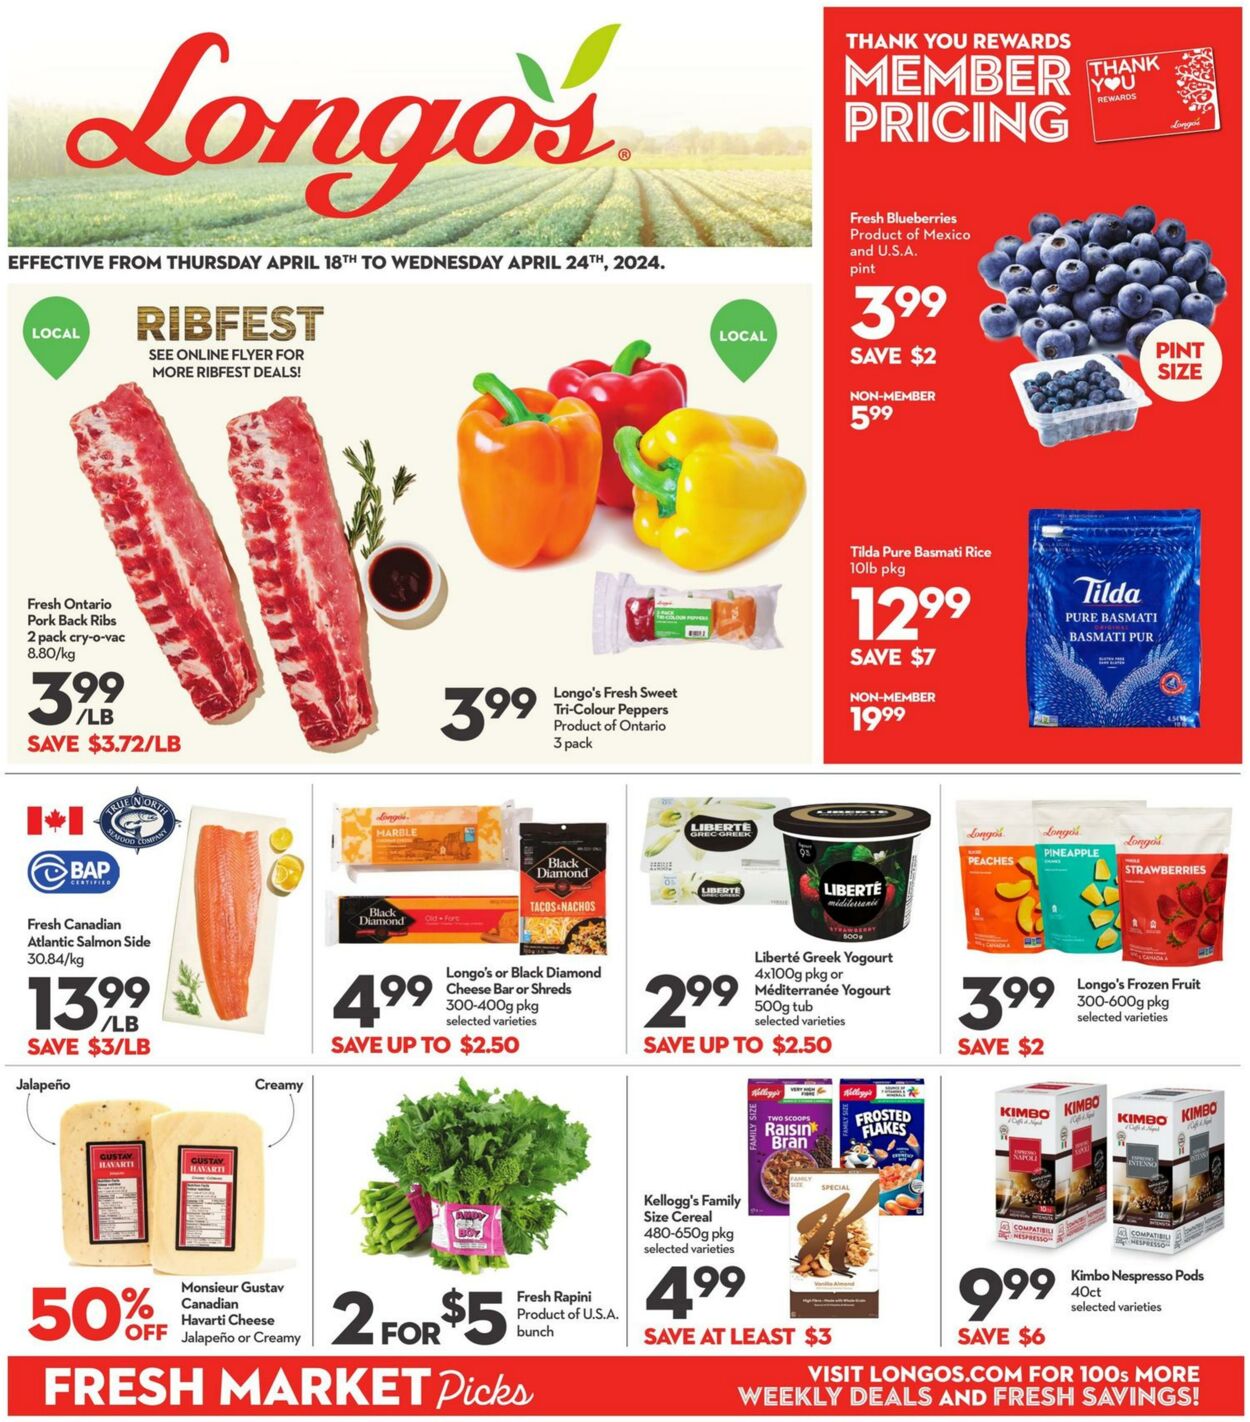 Longo's Promotional flyers